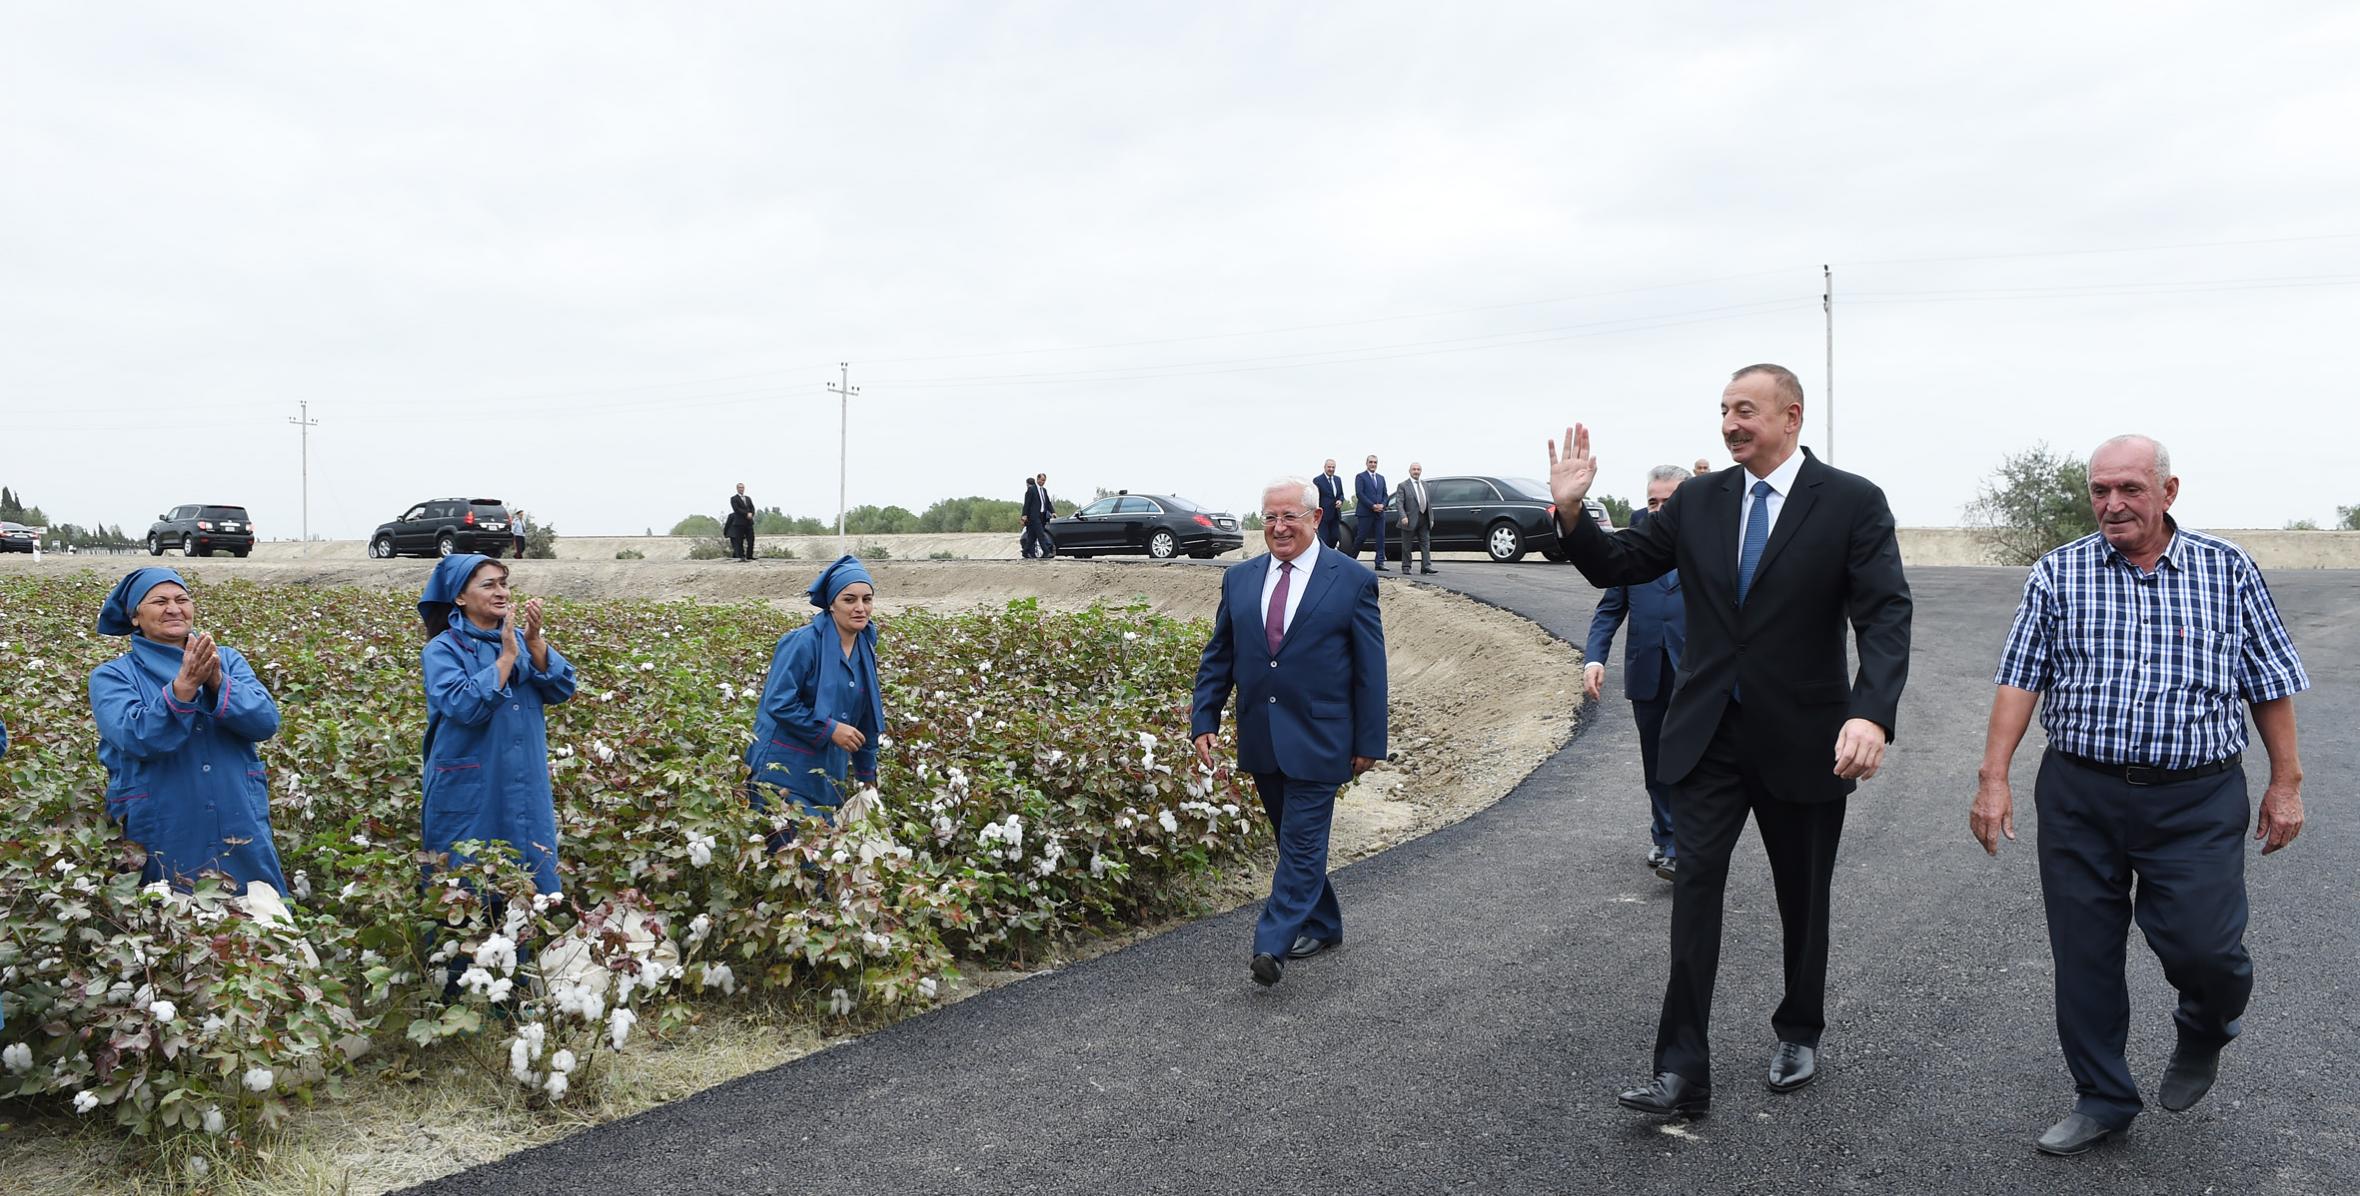 Ilham Aliyev visited cotton plantation in Neftchala district